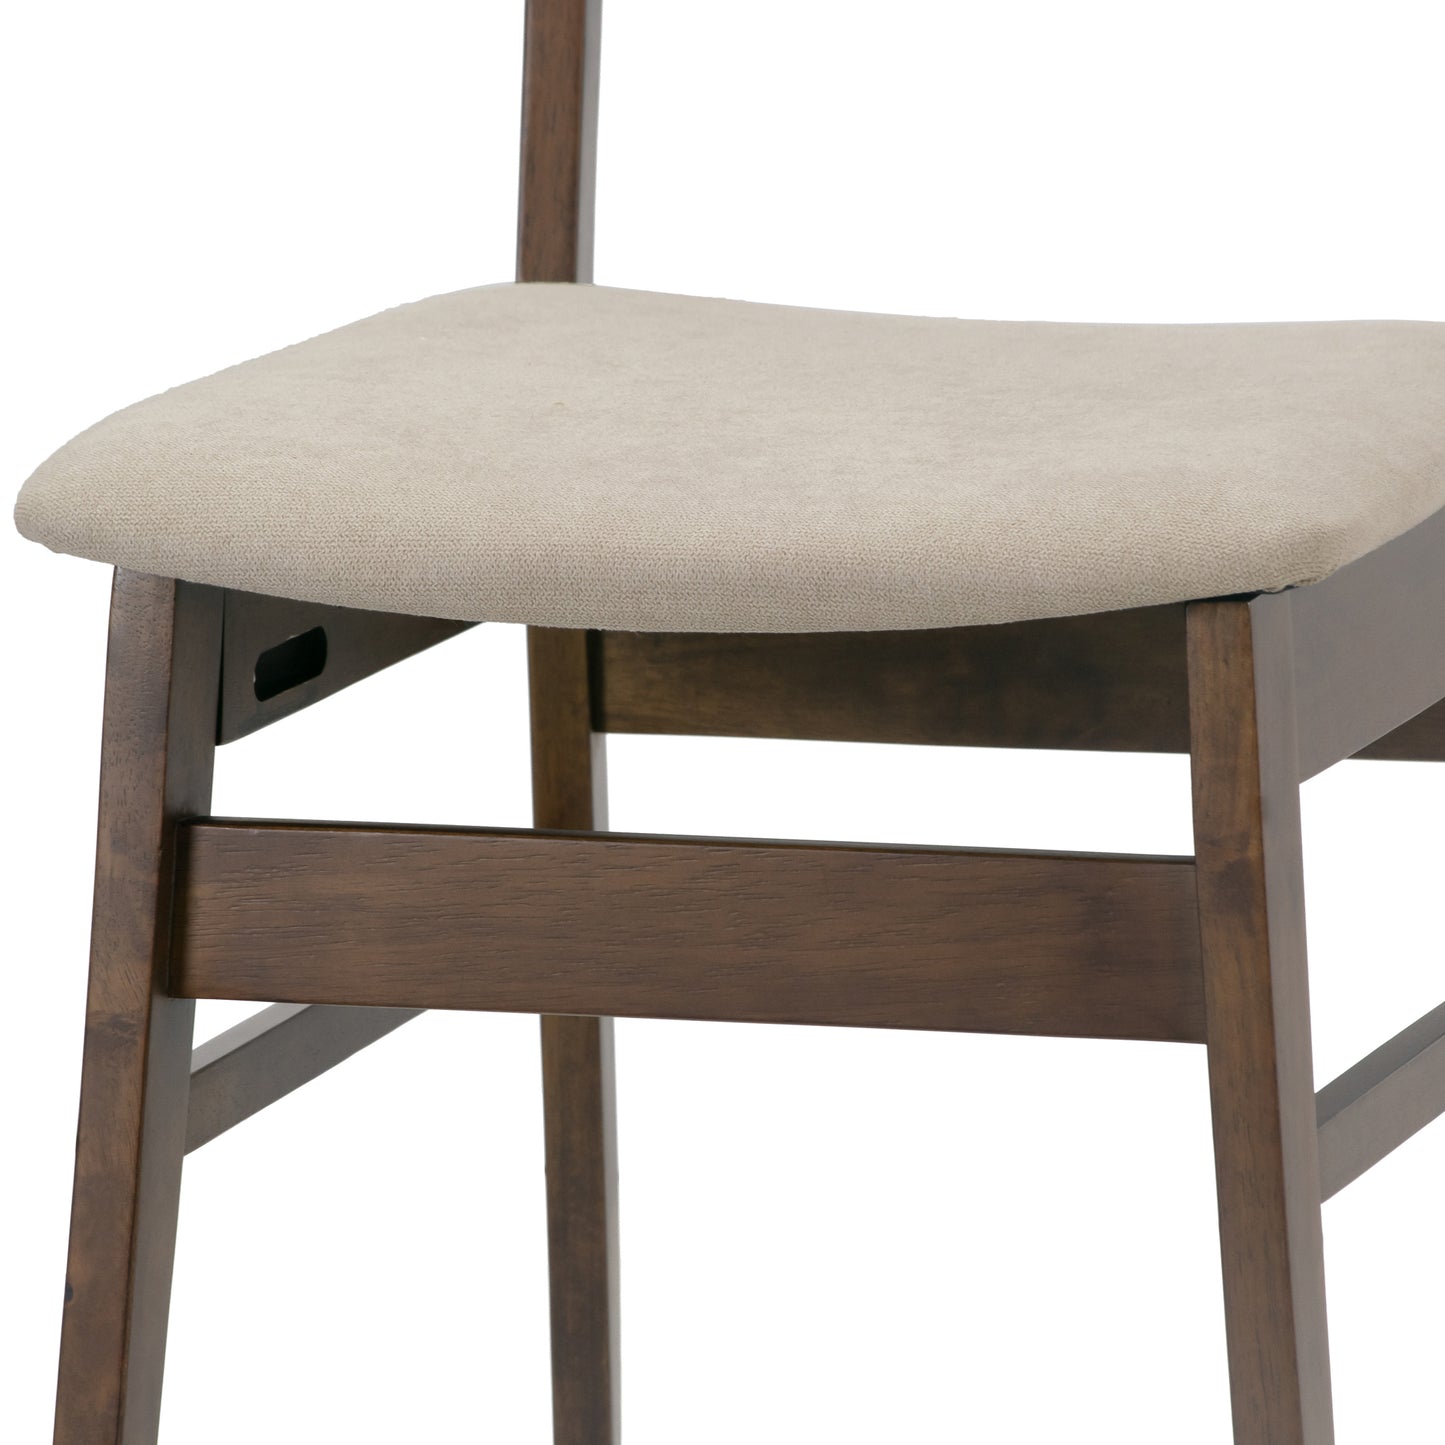 Set of 2 Auden Retro Modern Dark Brown Wood Wing Chair with Beige Fabric Seat